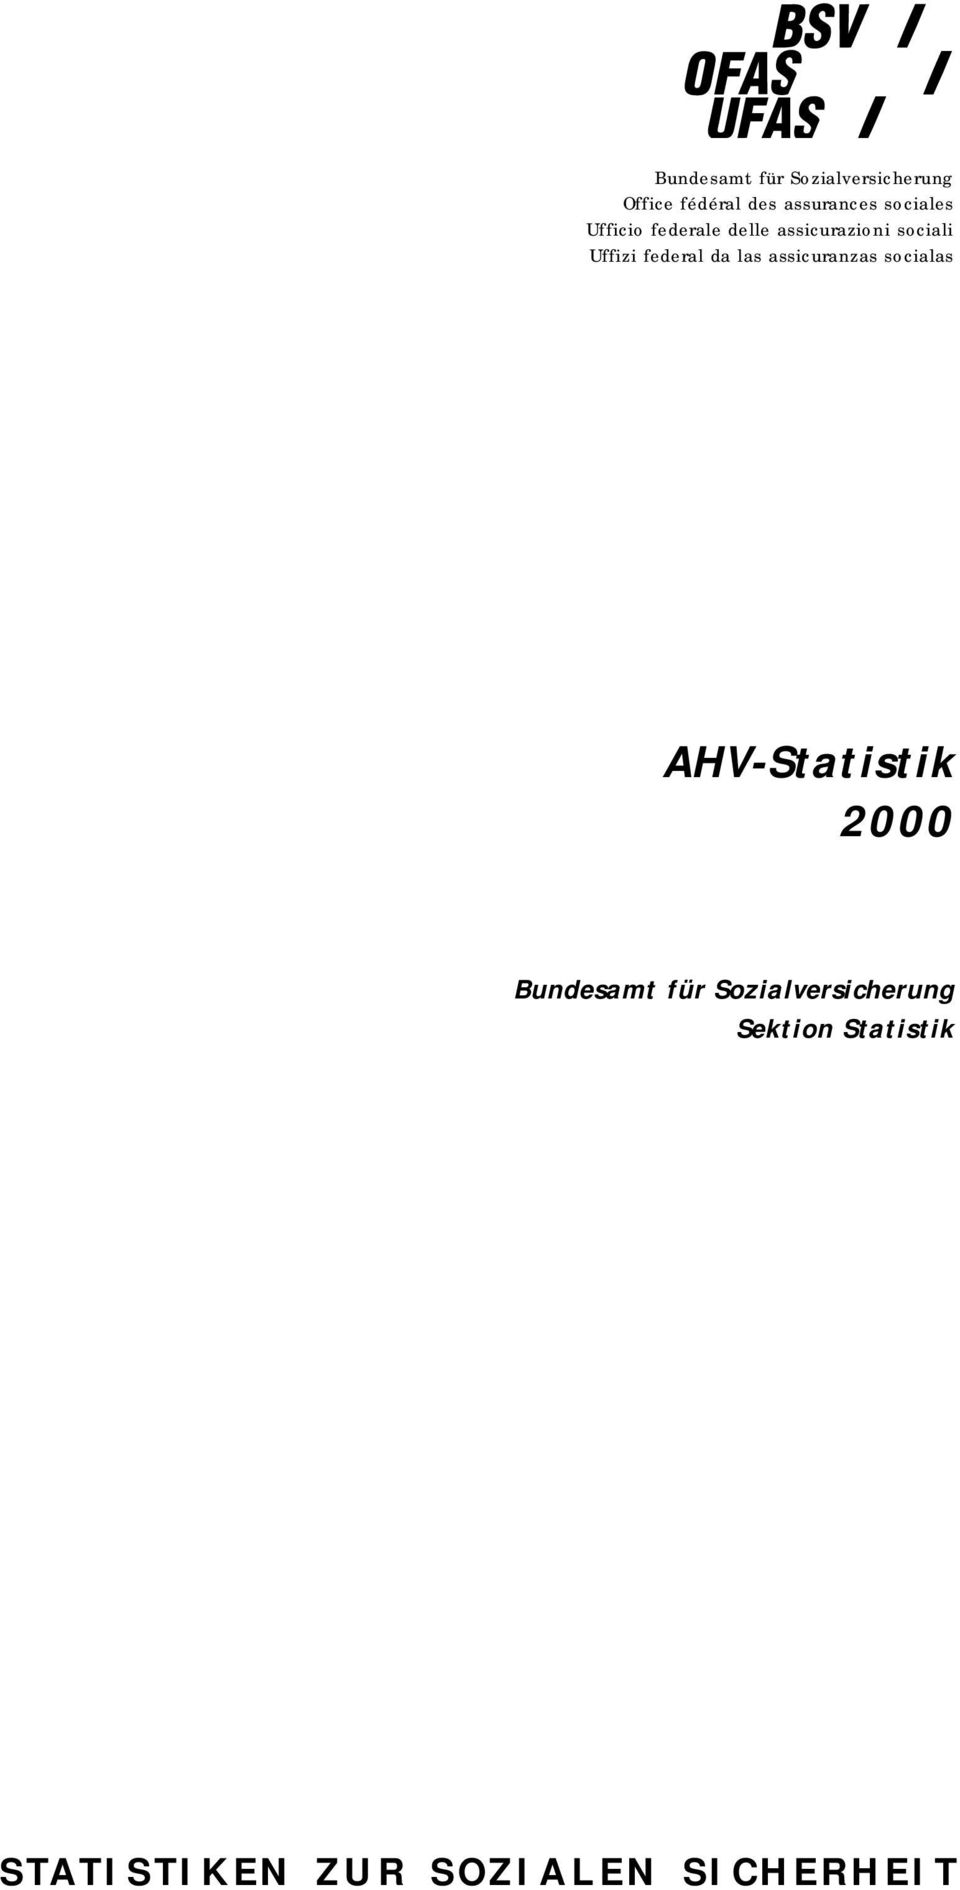 federal da las assicuranzas socialas AHV-Statistik 2000 Bundesamt